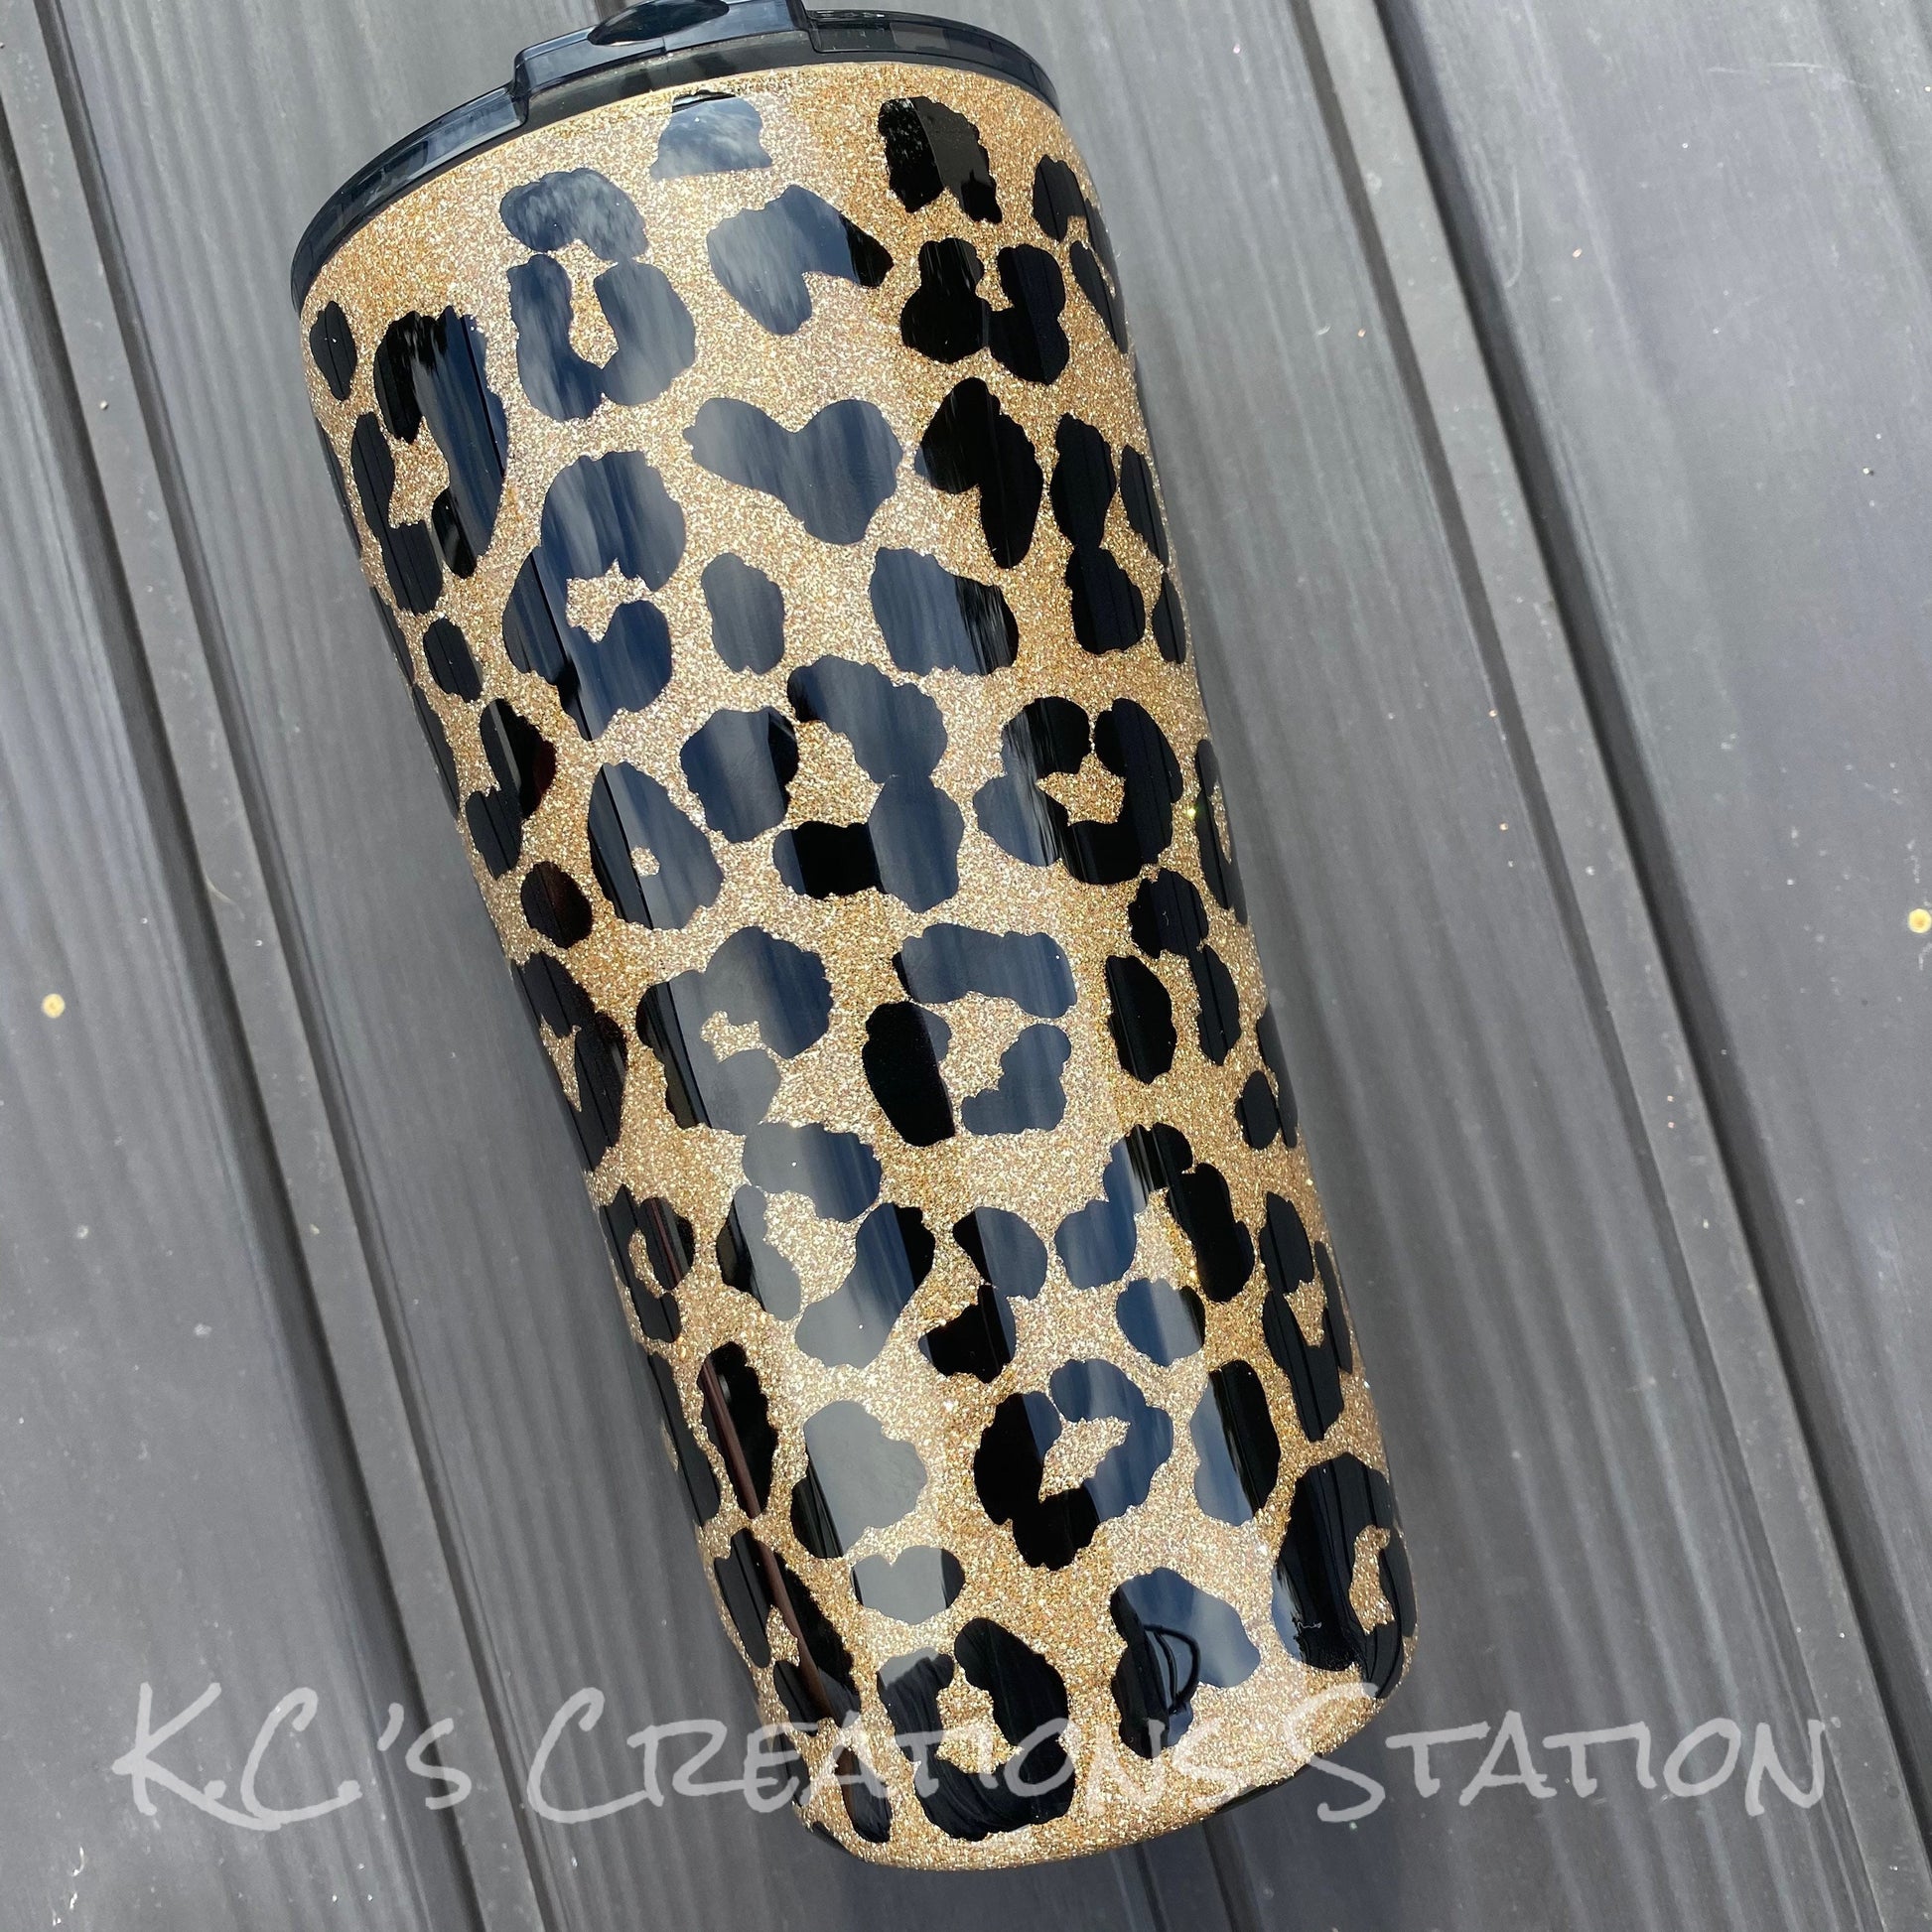 Leopard is the new black glitter tumbler, animal print tumbler, leopar –  K.C.'s Creations Station